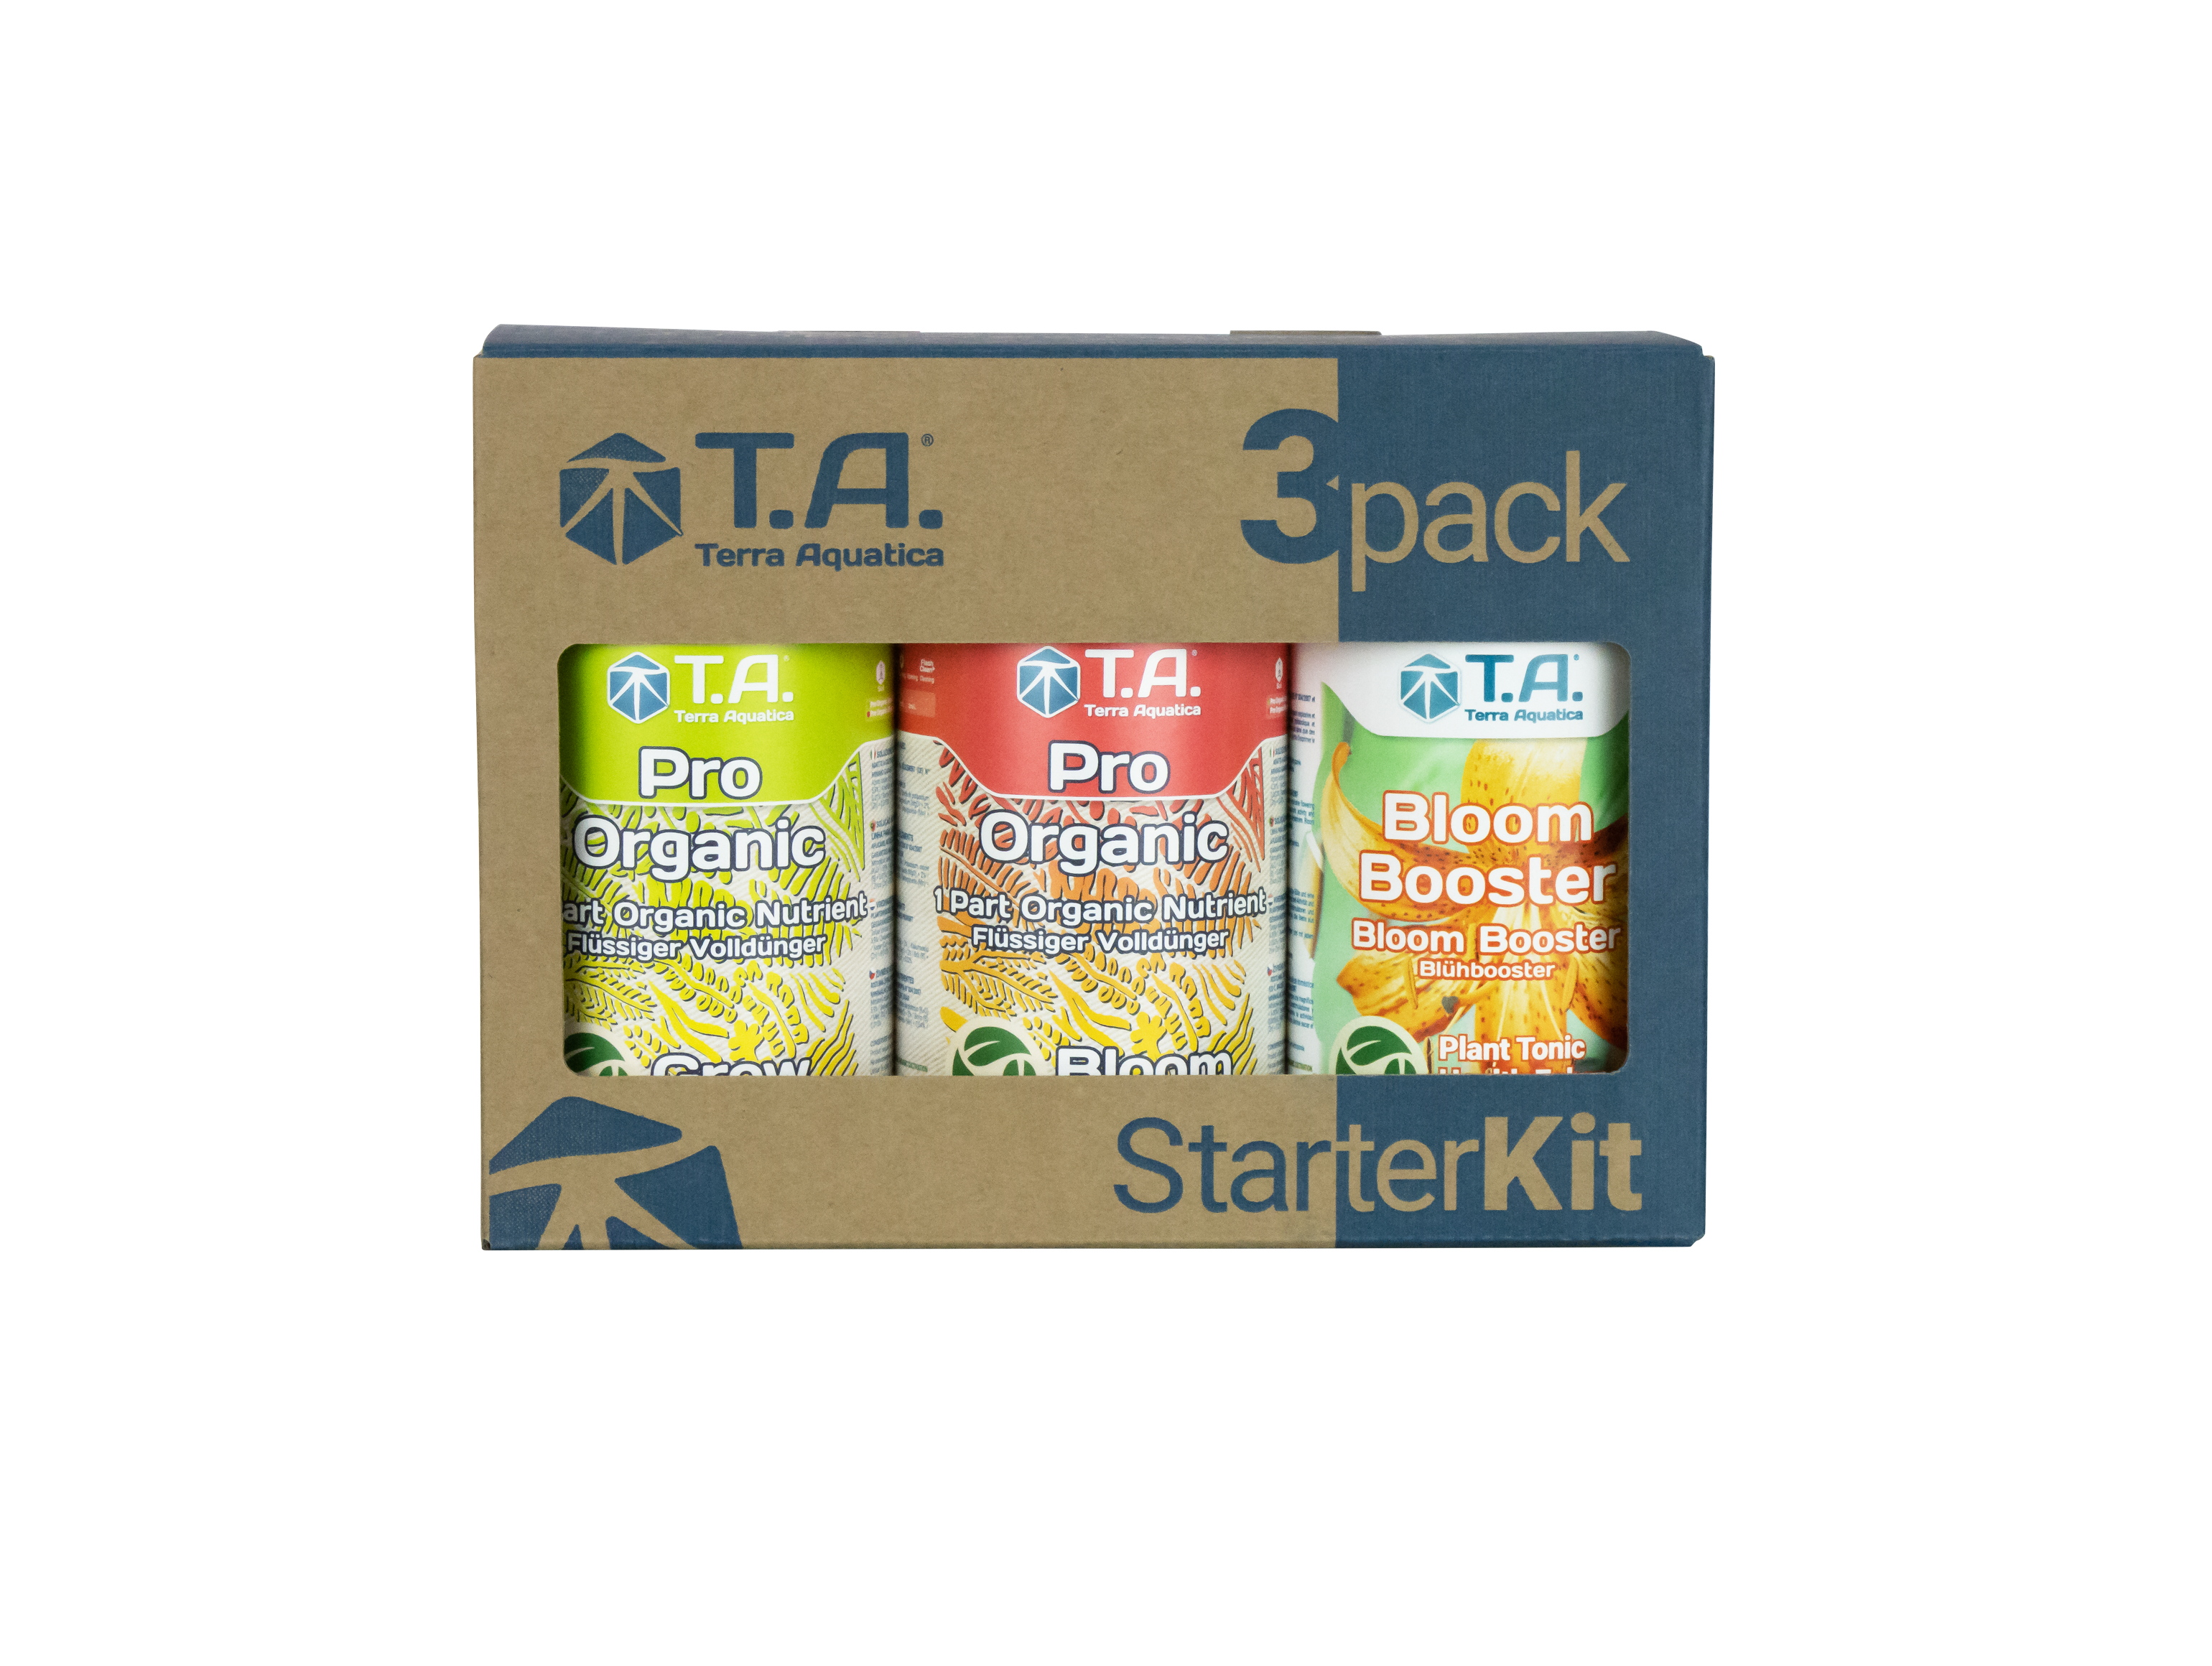 GHE / T.A. Terra Aquatica 3-Pack Starter Kit (Pro Organic) 3 x 500 ml